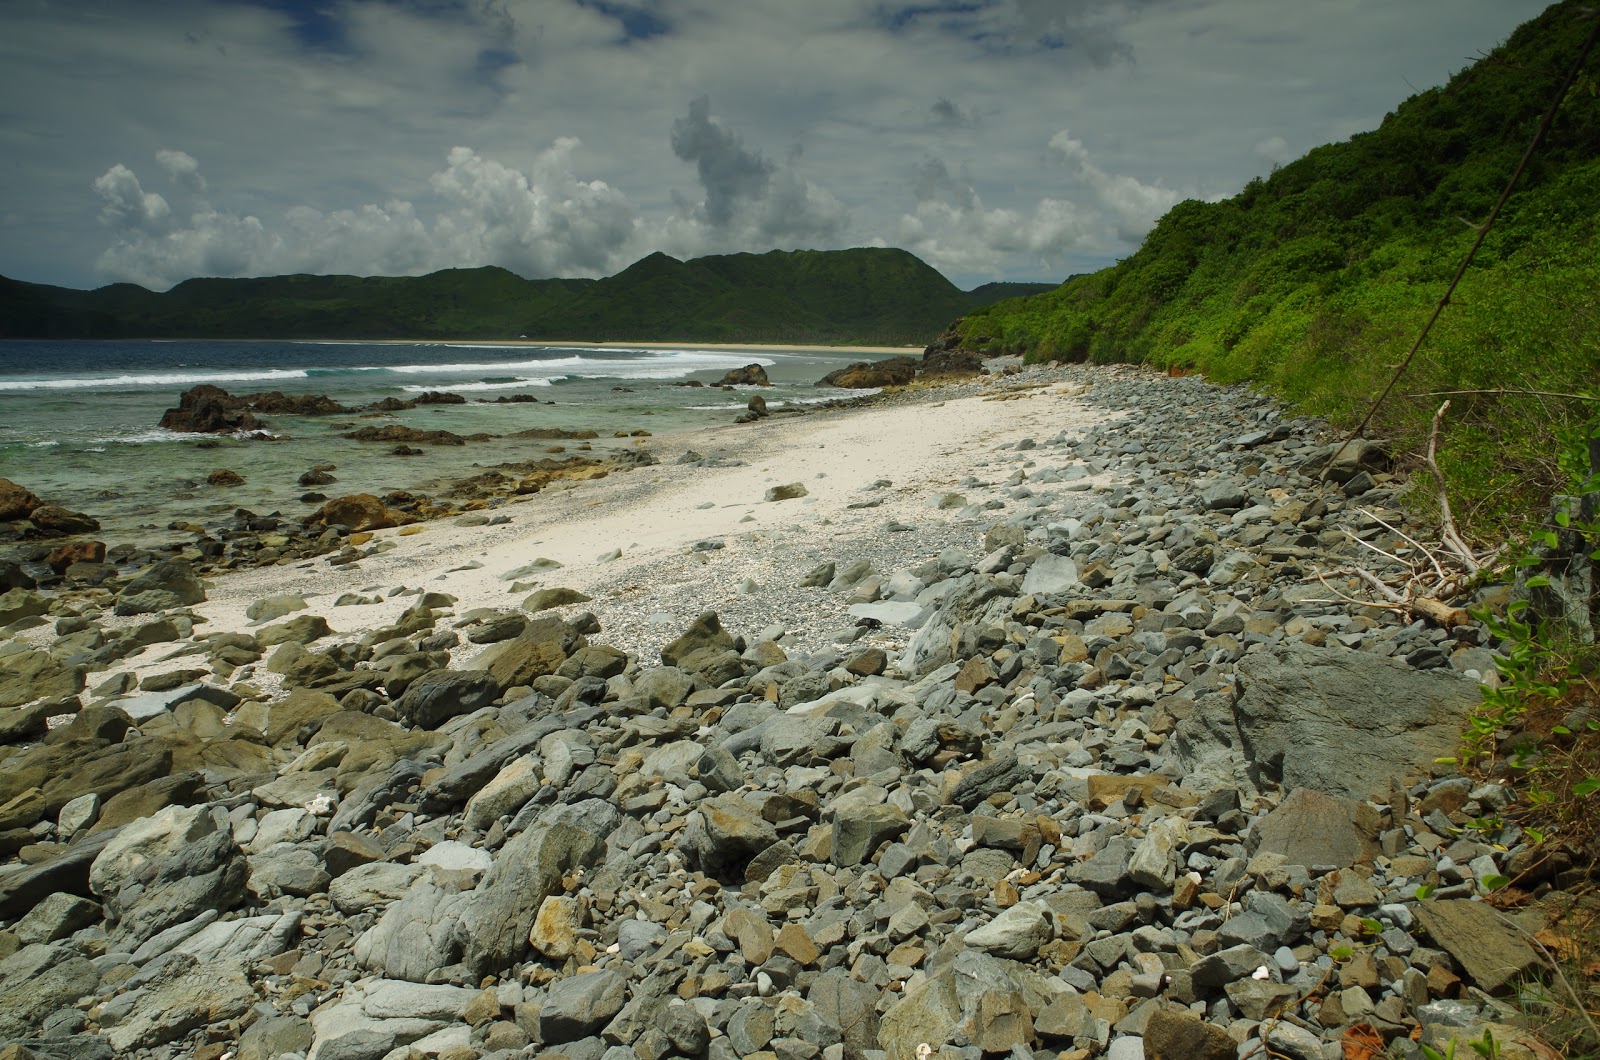 Foto di Batu Bereng Beach con una superficie del sabbia luminosa e rocce